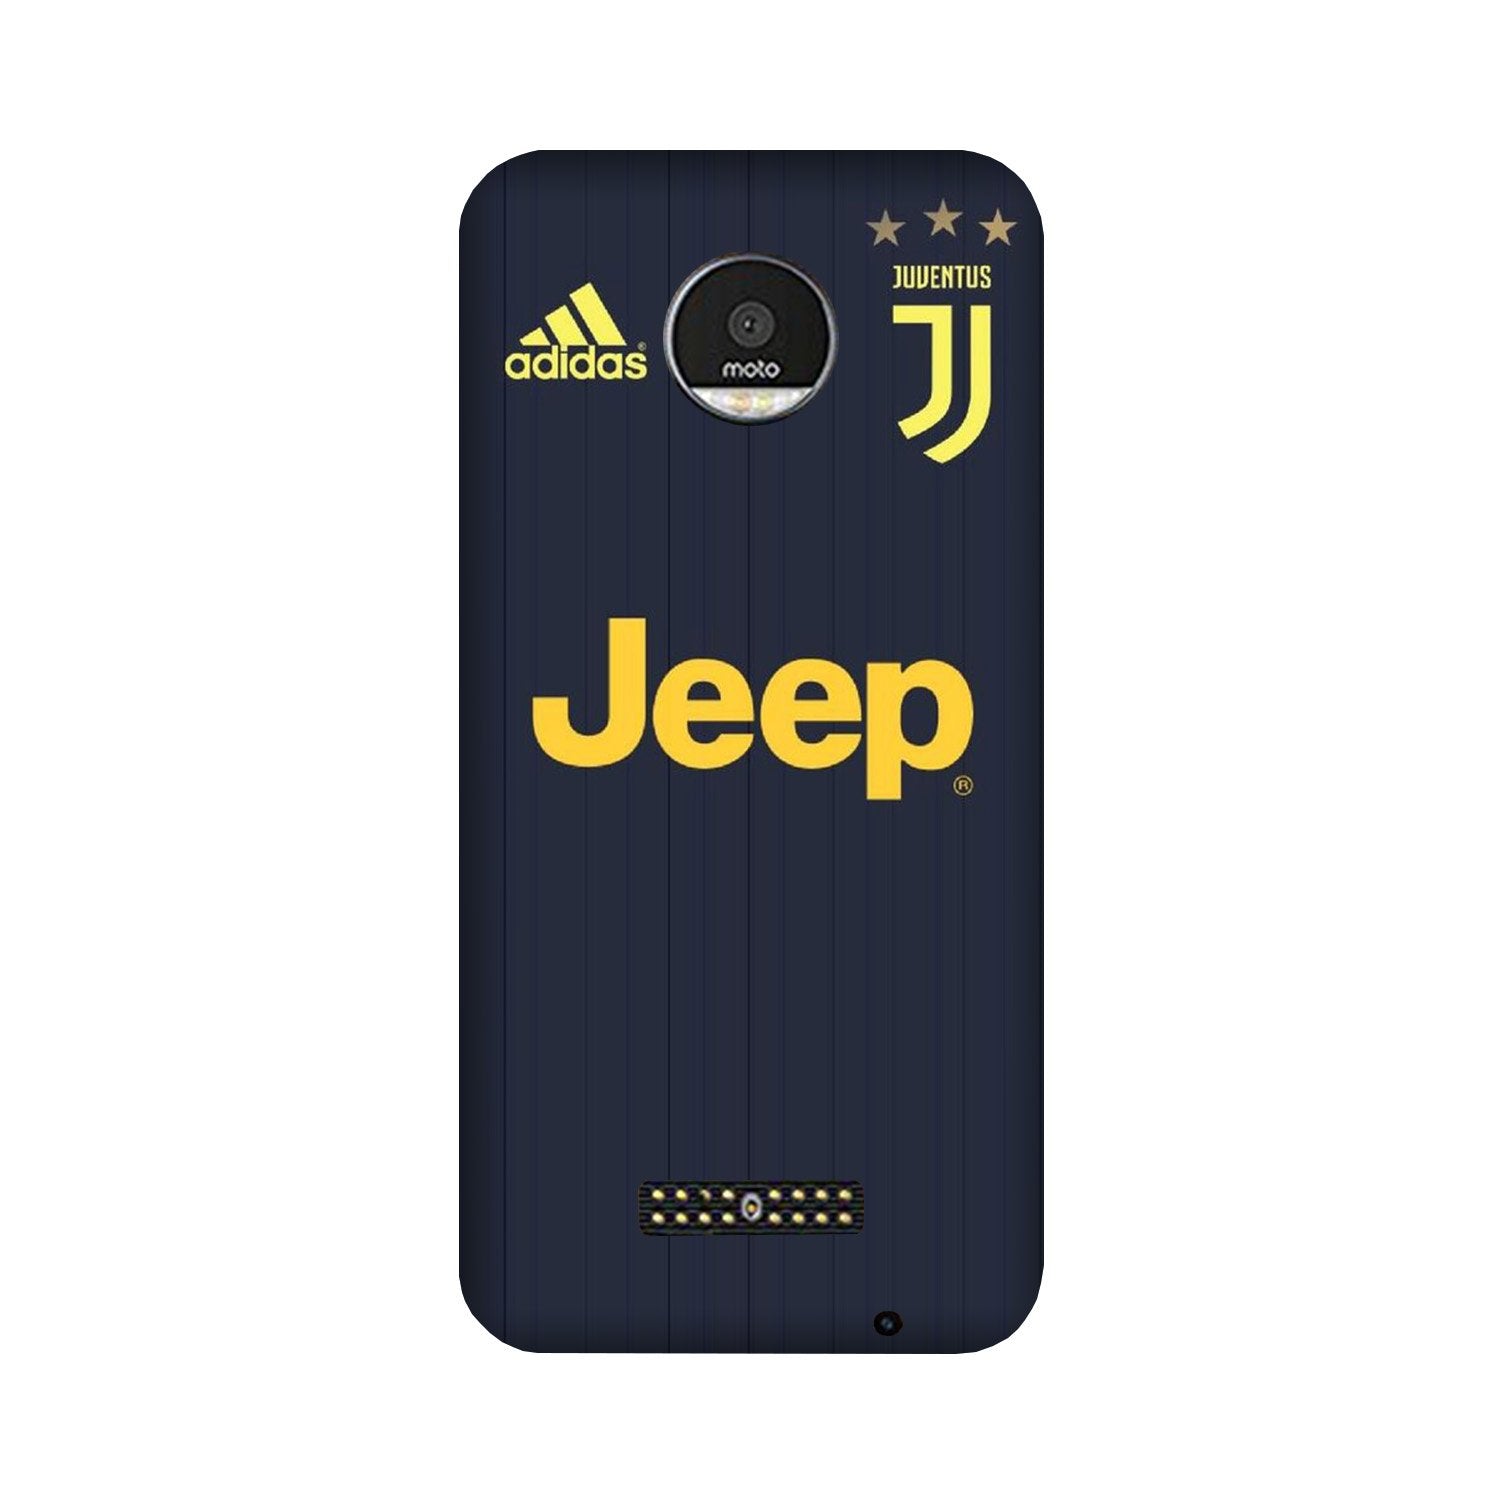 Jeep Juventus Case for Moto Z2 Play  (Design - 161)